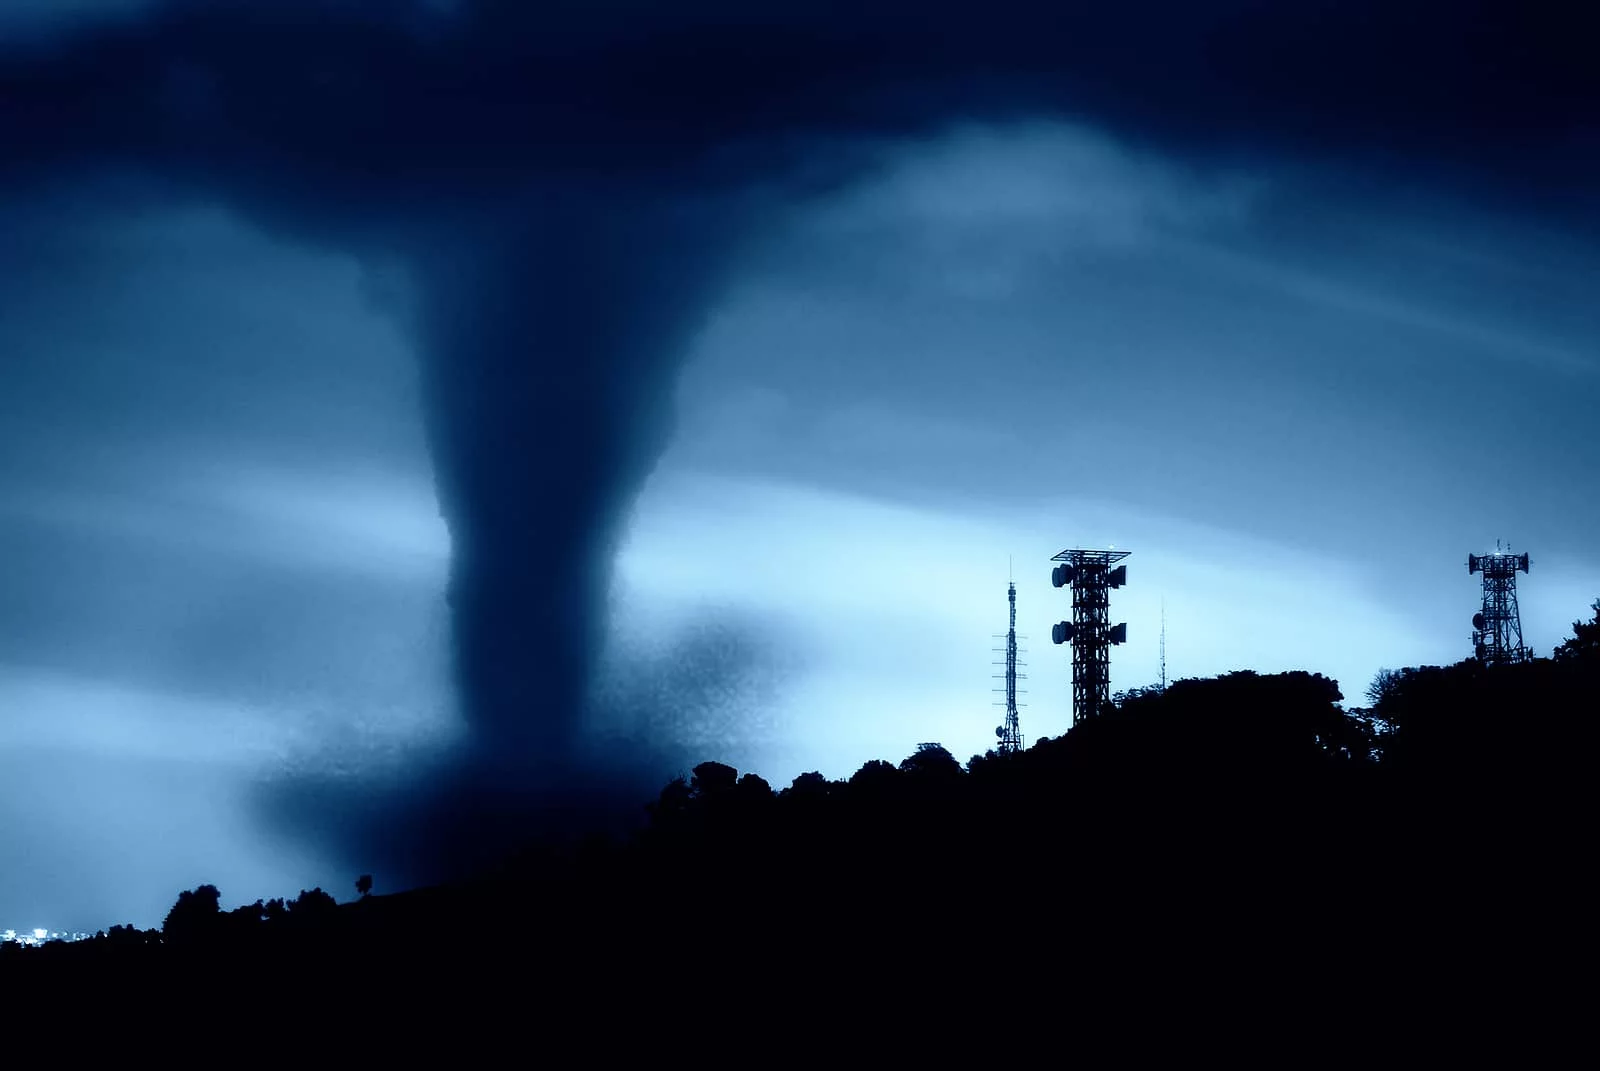 How long does tornado season last in Kansas?